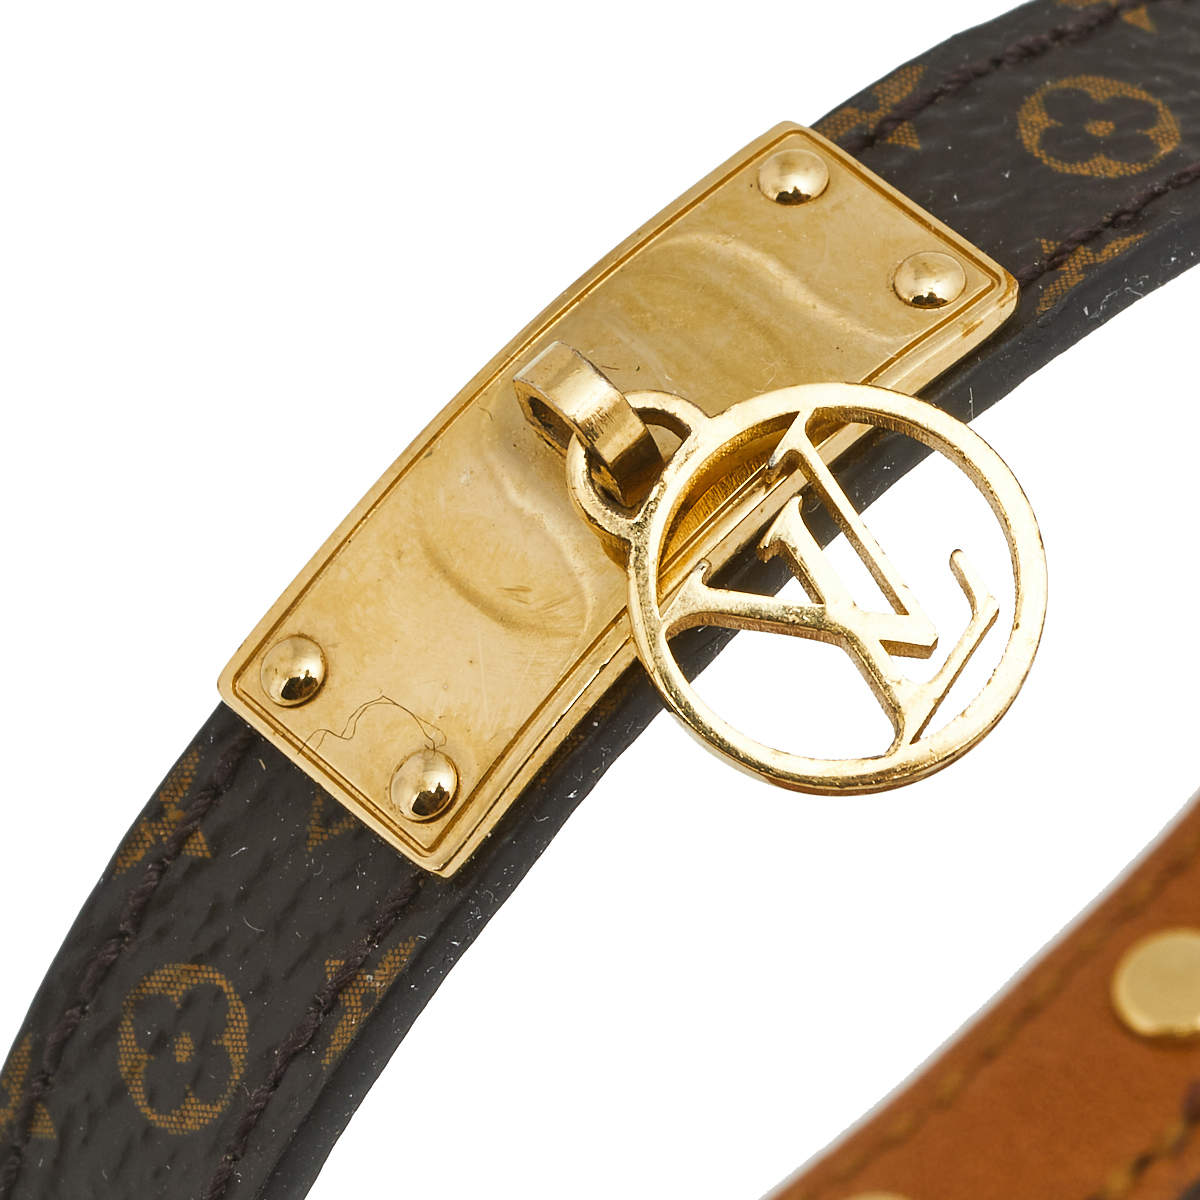 LOUIS VUITTON Monogram Logomania Bracelet 19 491360